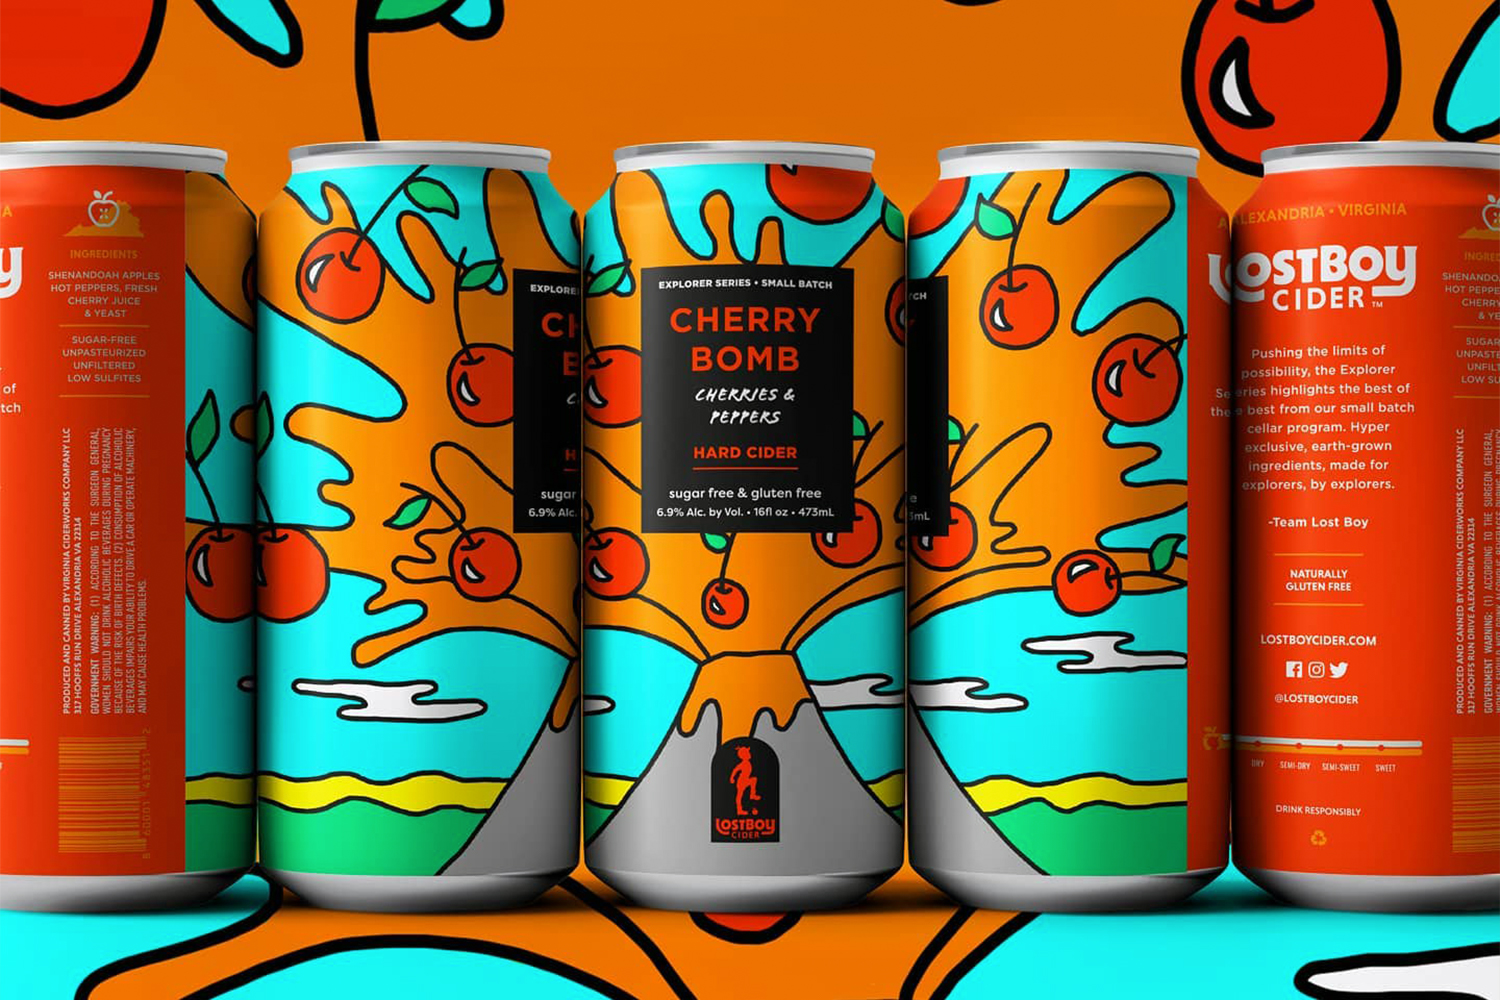 Lost Boy Cider's Cherry Bomb